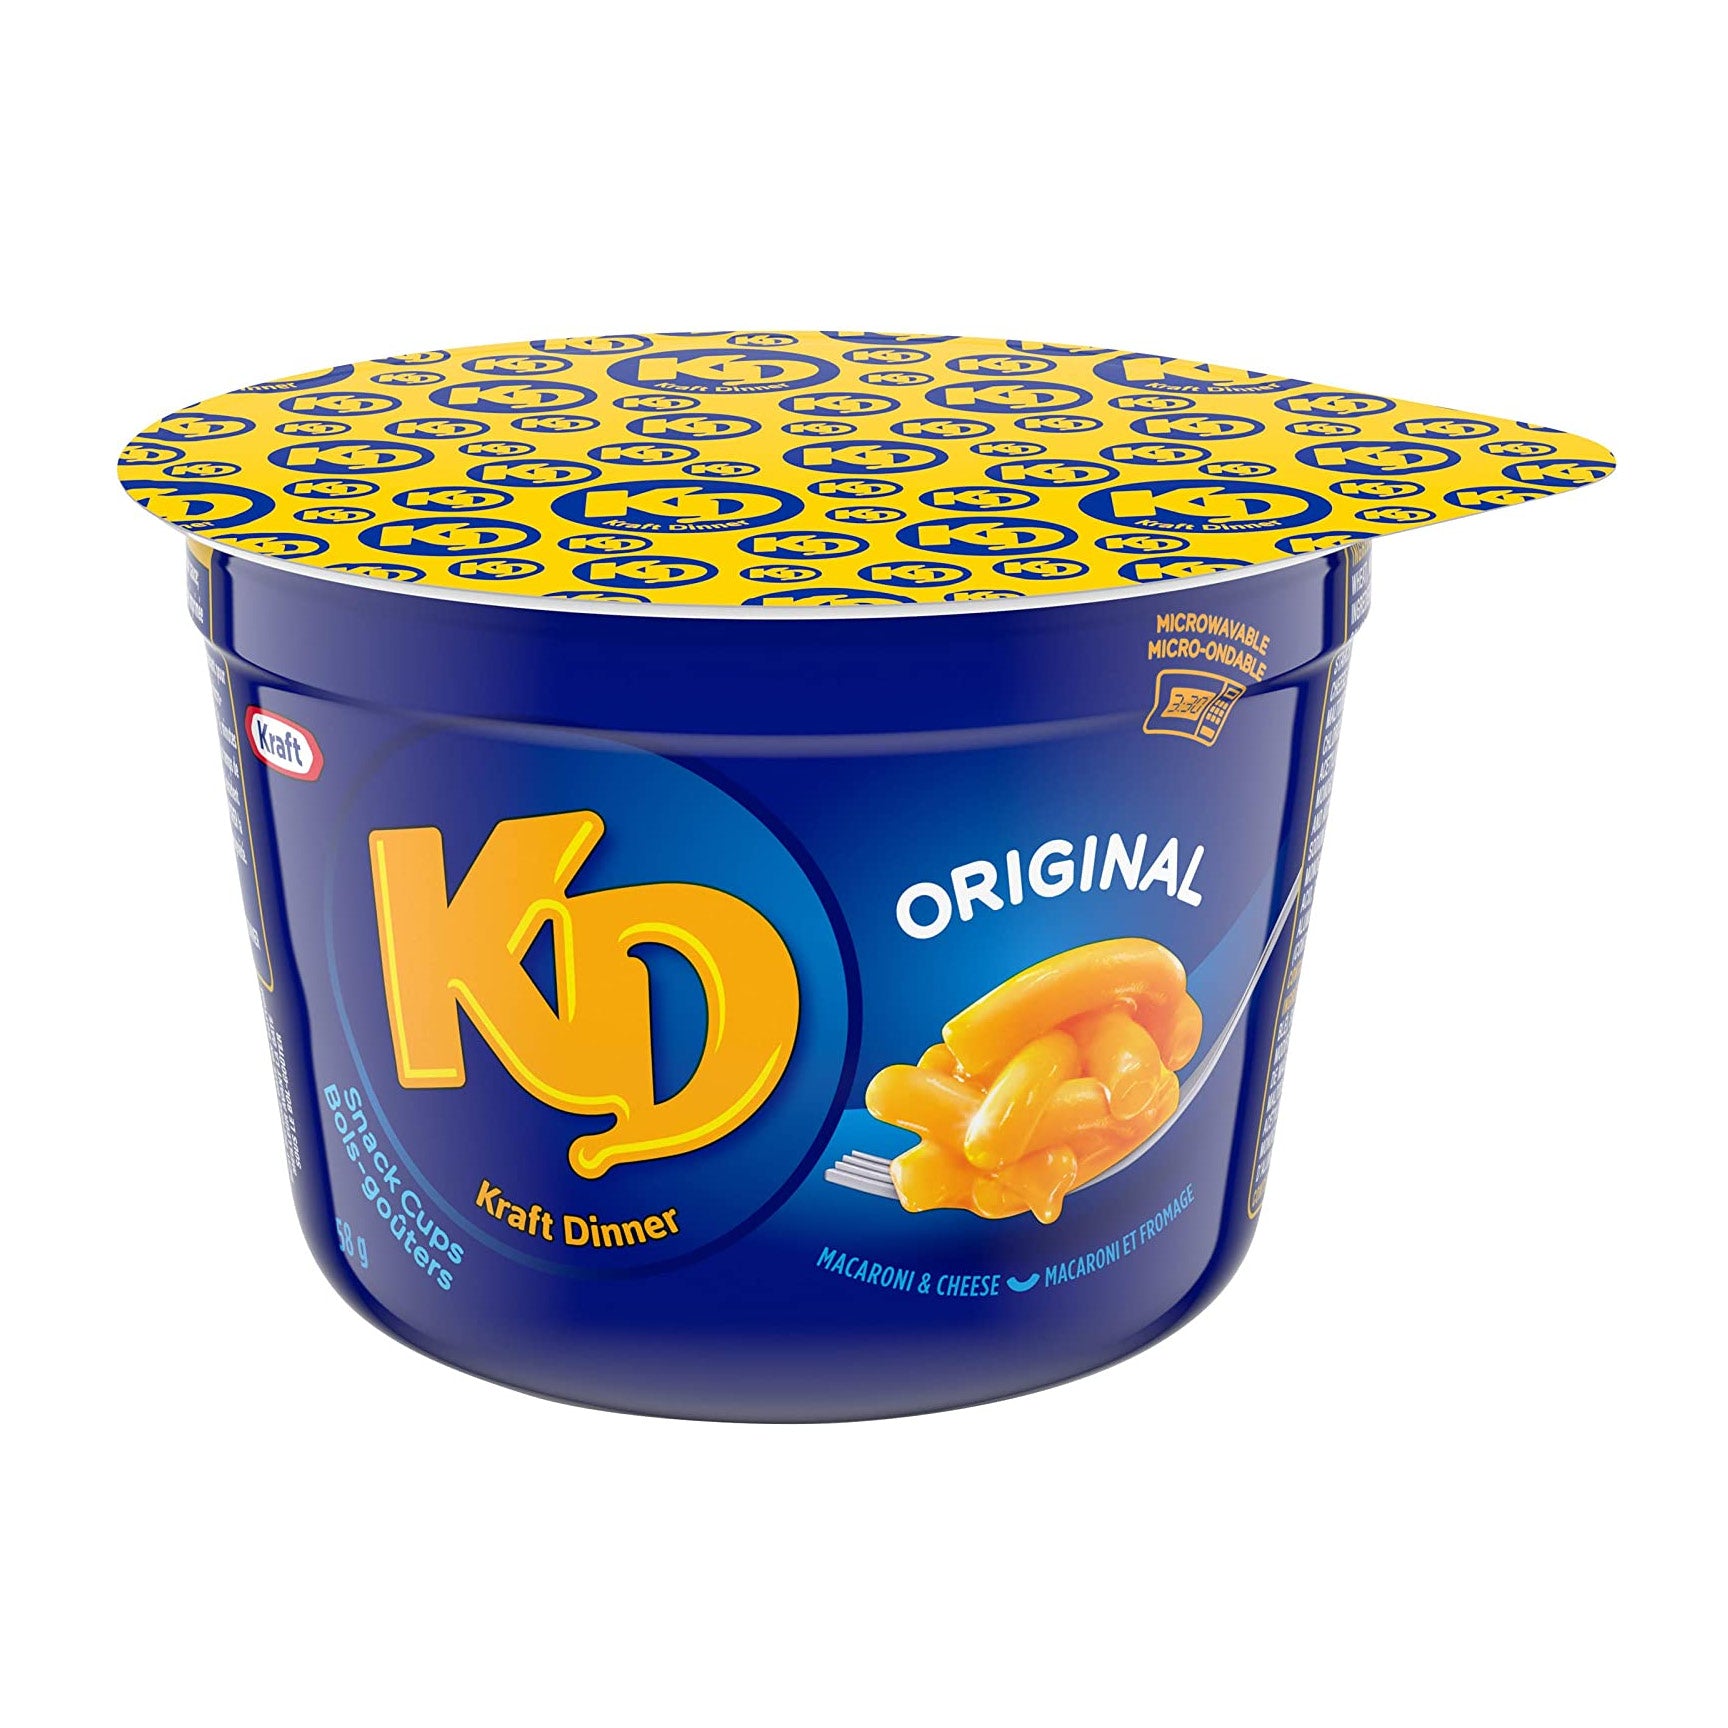 Kraft Dinner Macaroni & Cheese Cups - Original, 58G